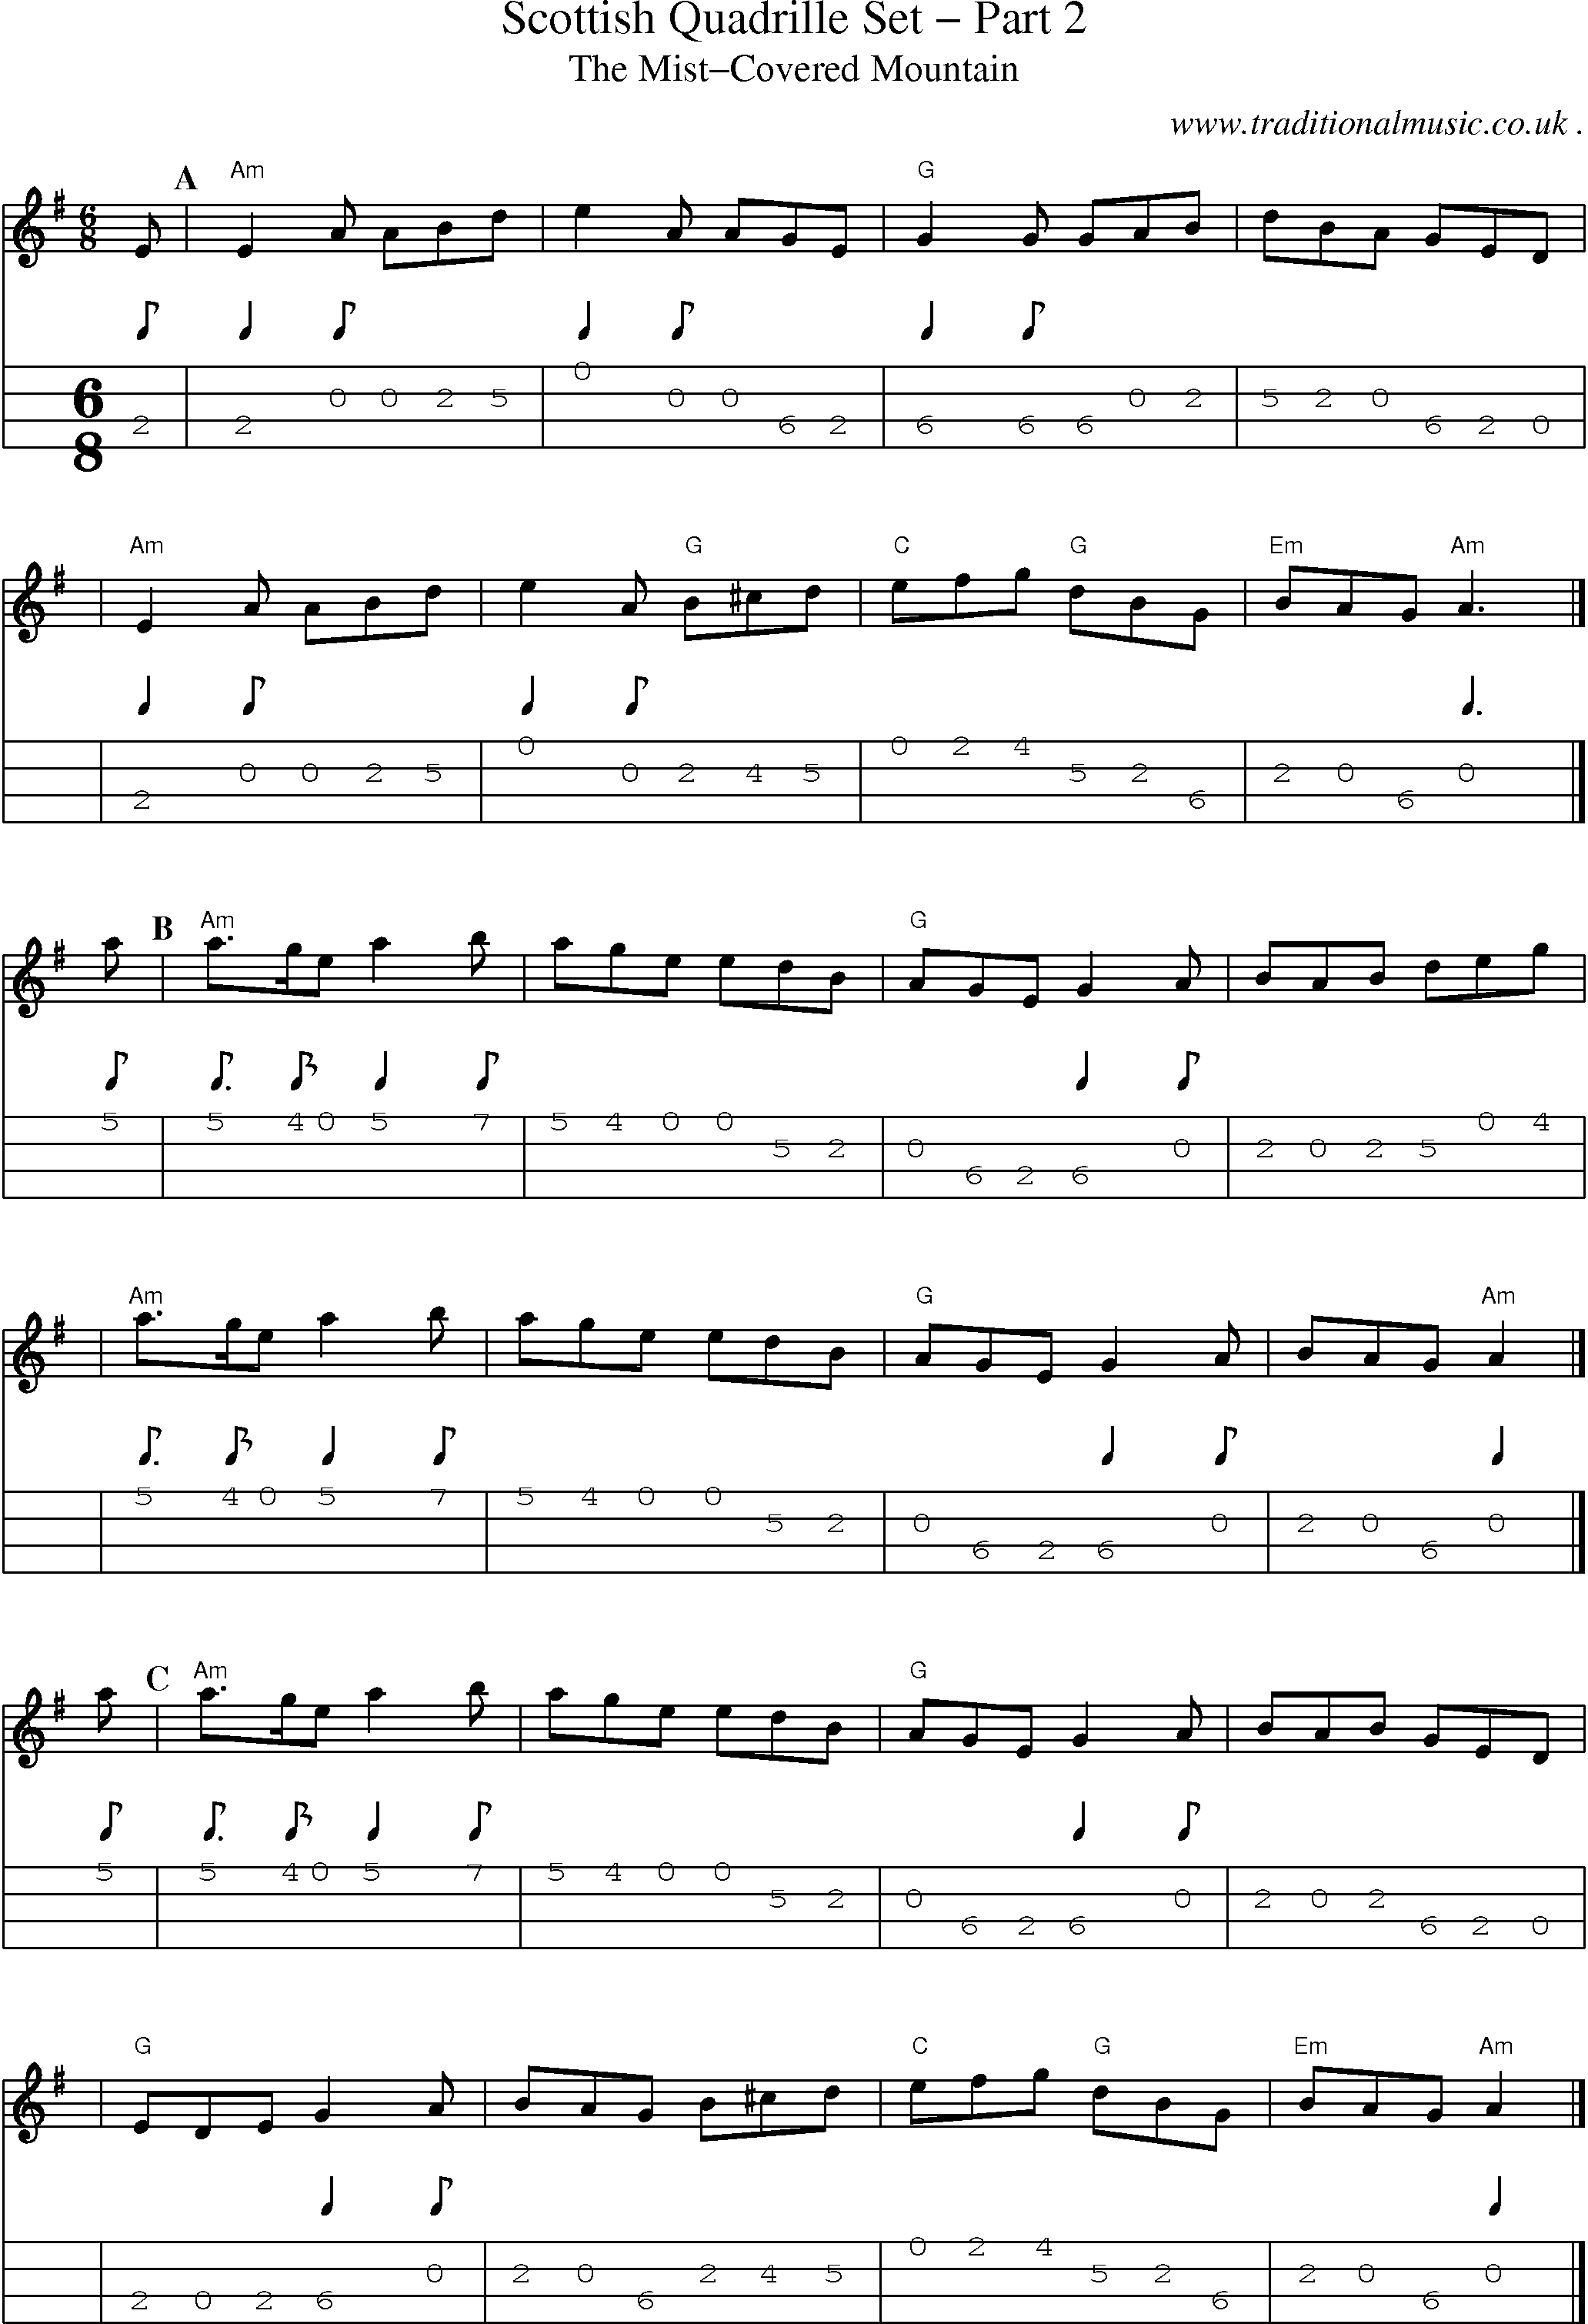 Sheet-music  score, Chords and Mandolin Tabs for Scottish Quadrille Set Part 2